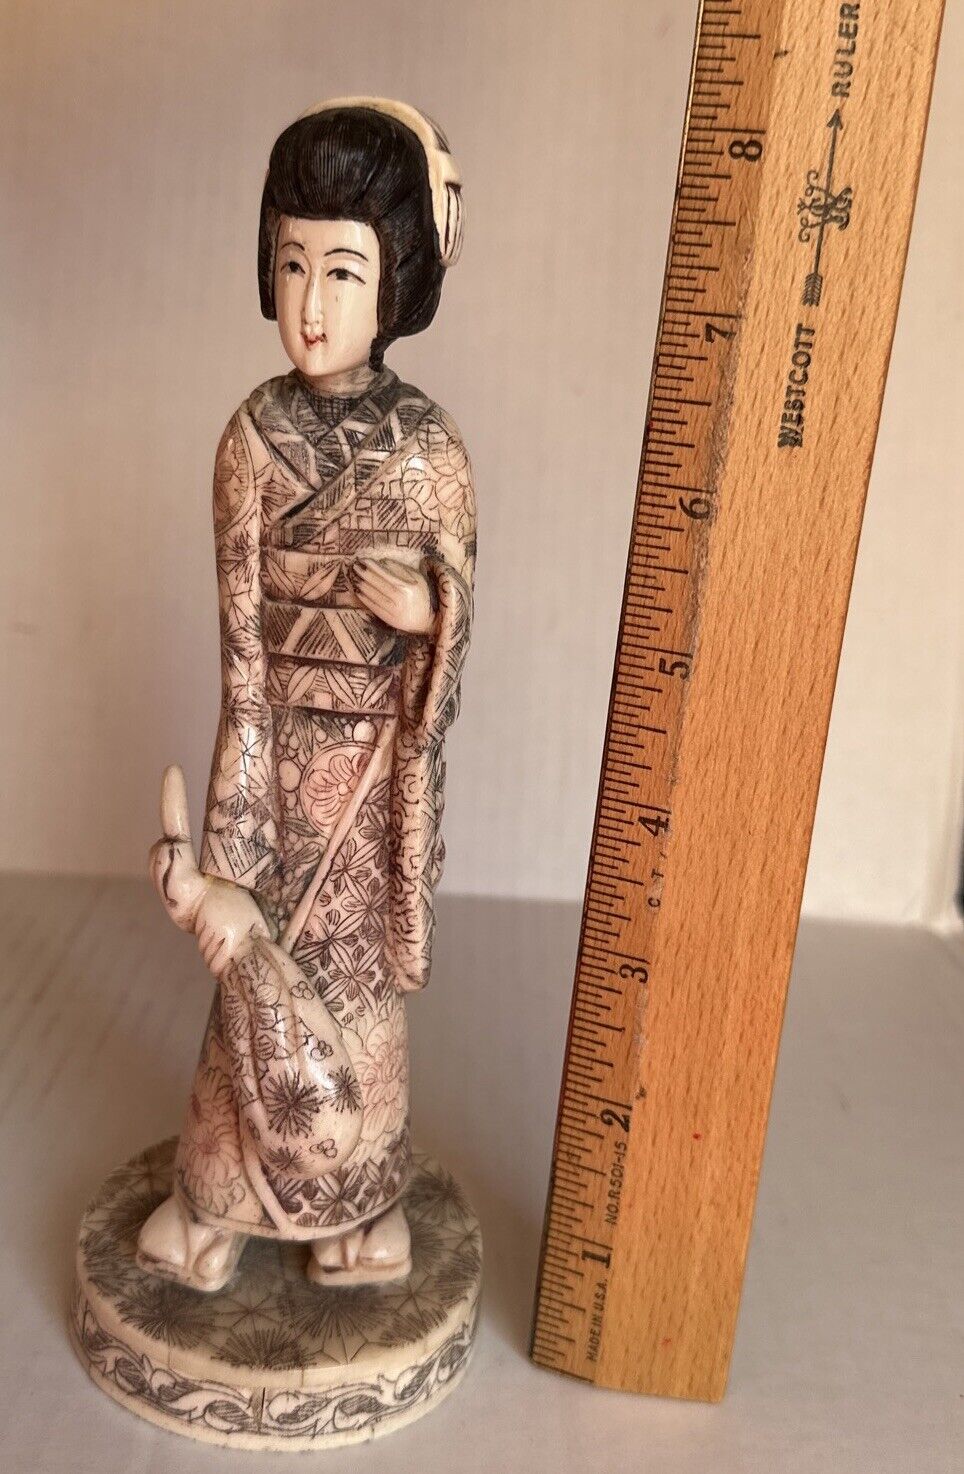 Antique 1880s Asian Geisha Statue Sculpture Figurine, artist stamped signed Hand